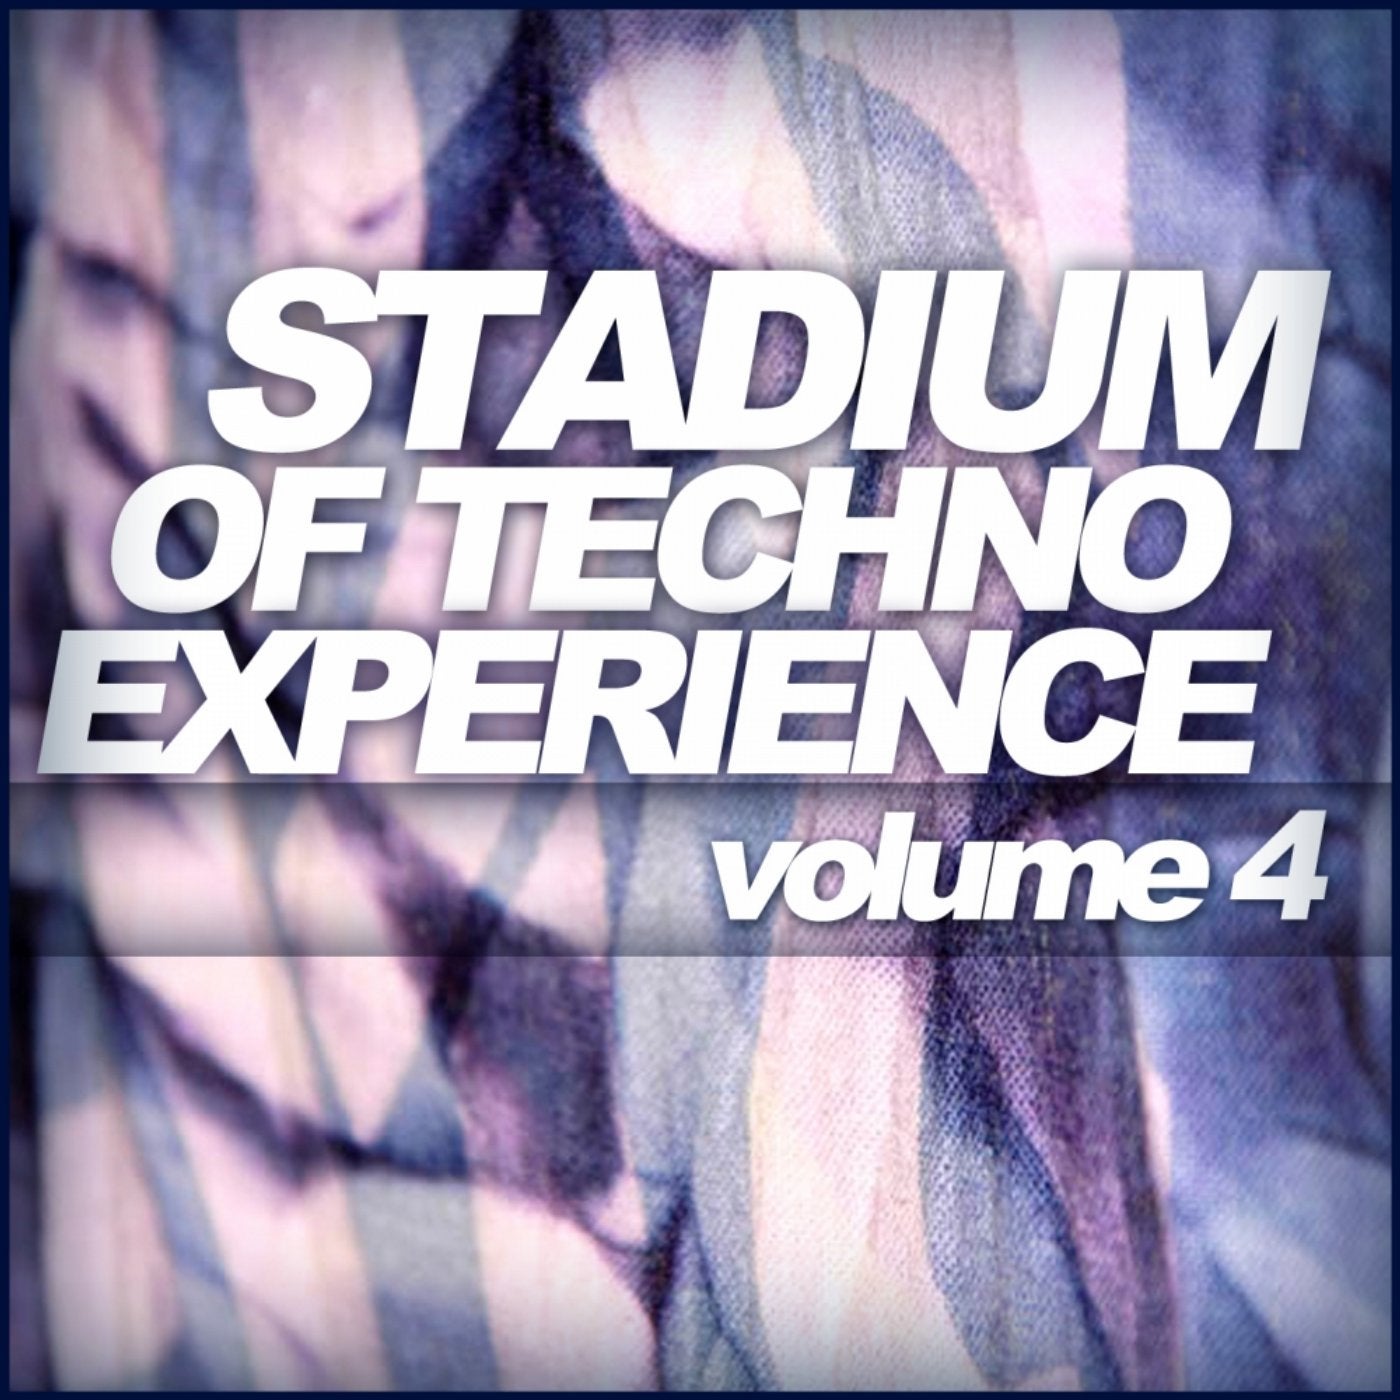 Stadium Of Techno Experience Vol.4